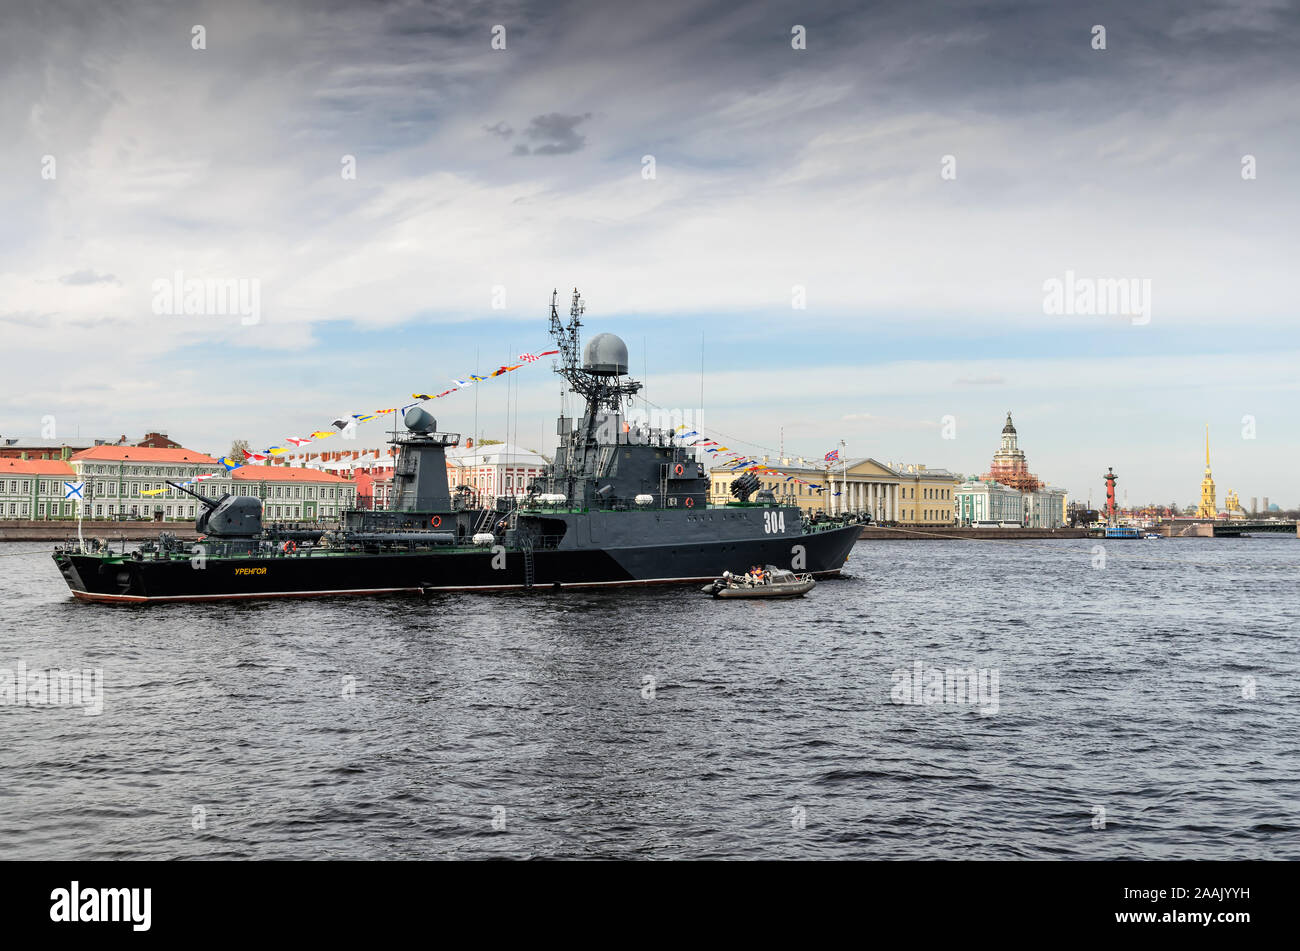 Saint-Petersburg, Russia, May 6, 2015: warship on the Neva River Stock Photo